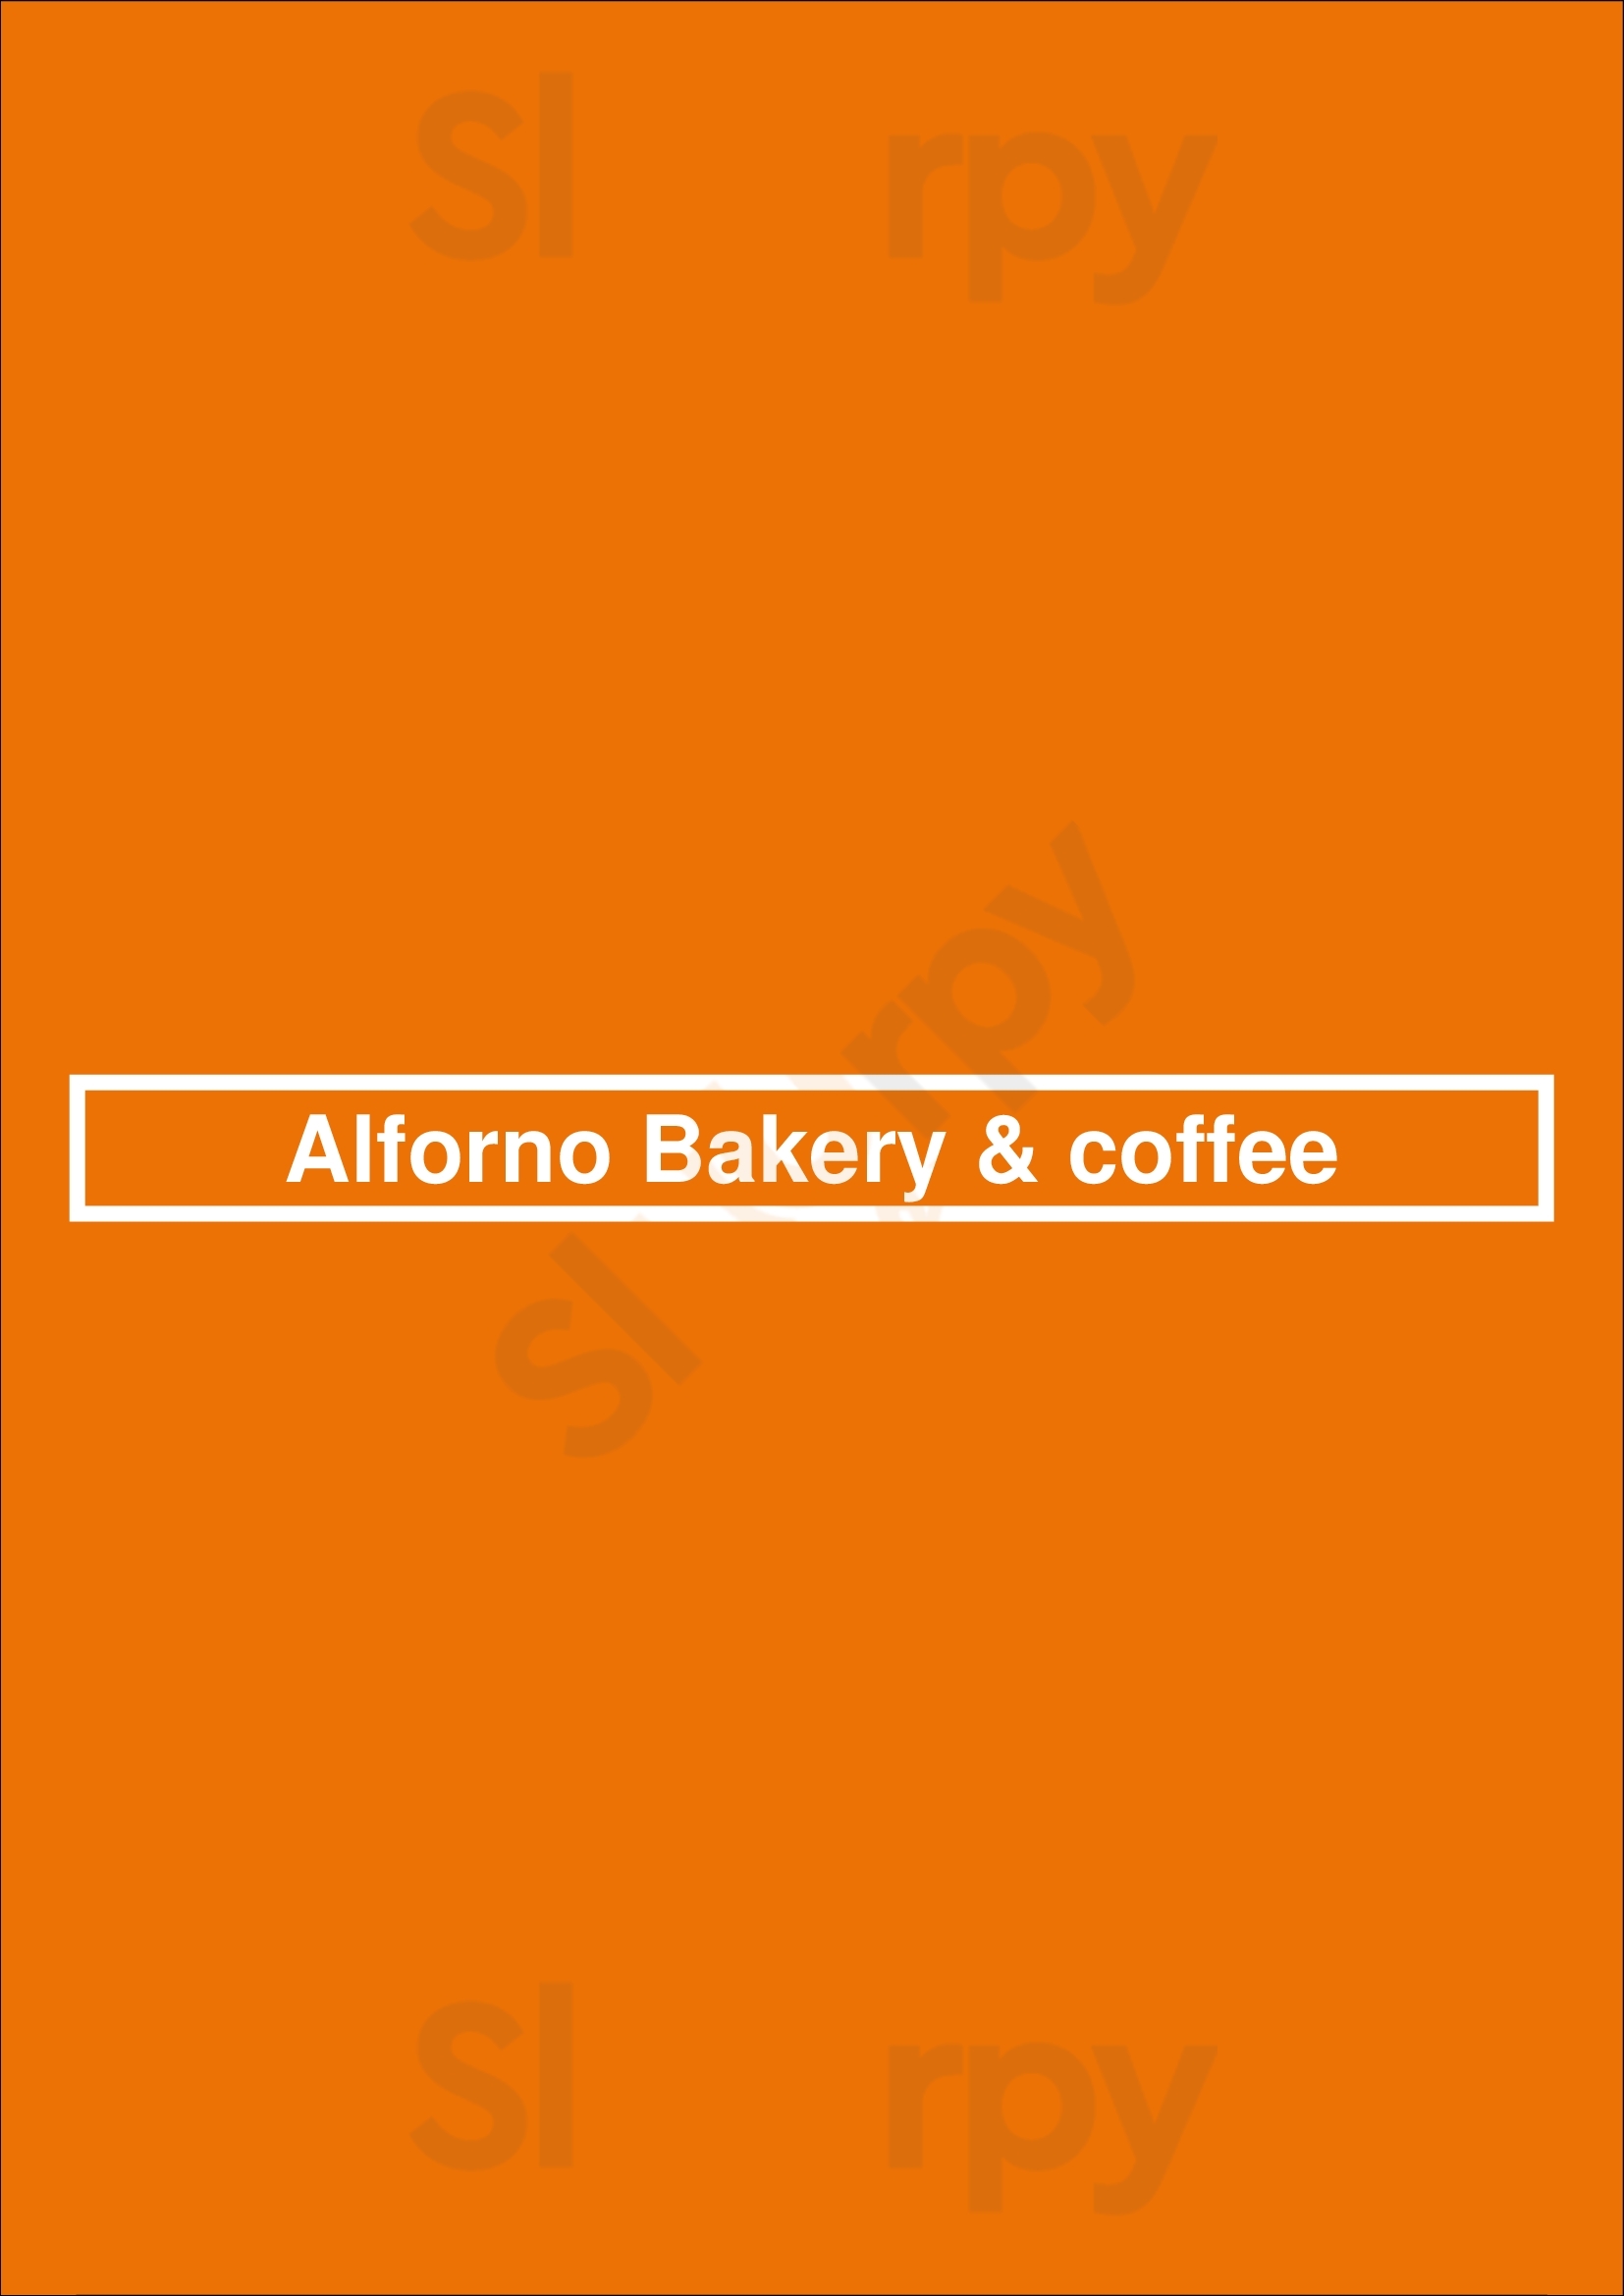 Alforno Bakery & Cafe Calgary Menu - 1